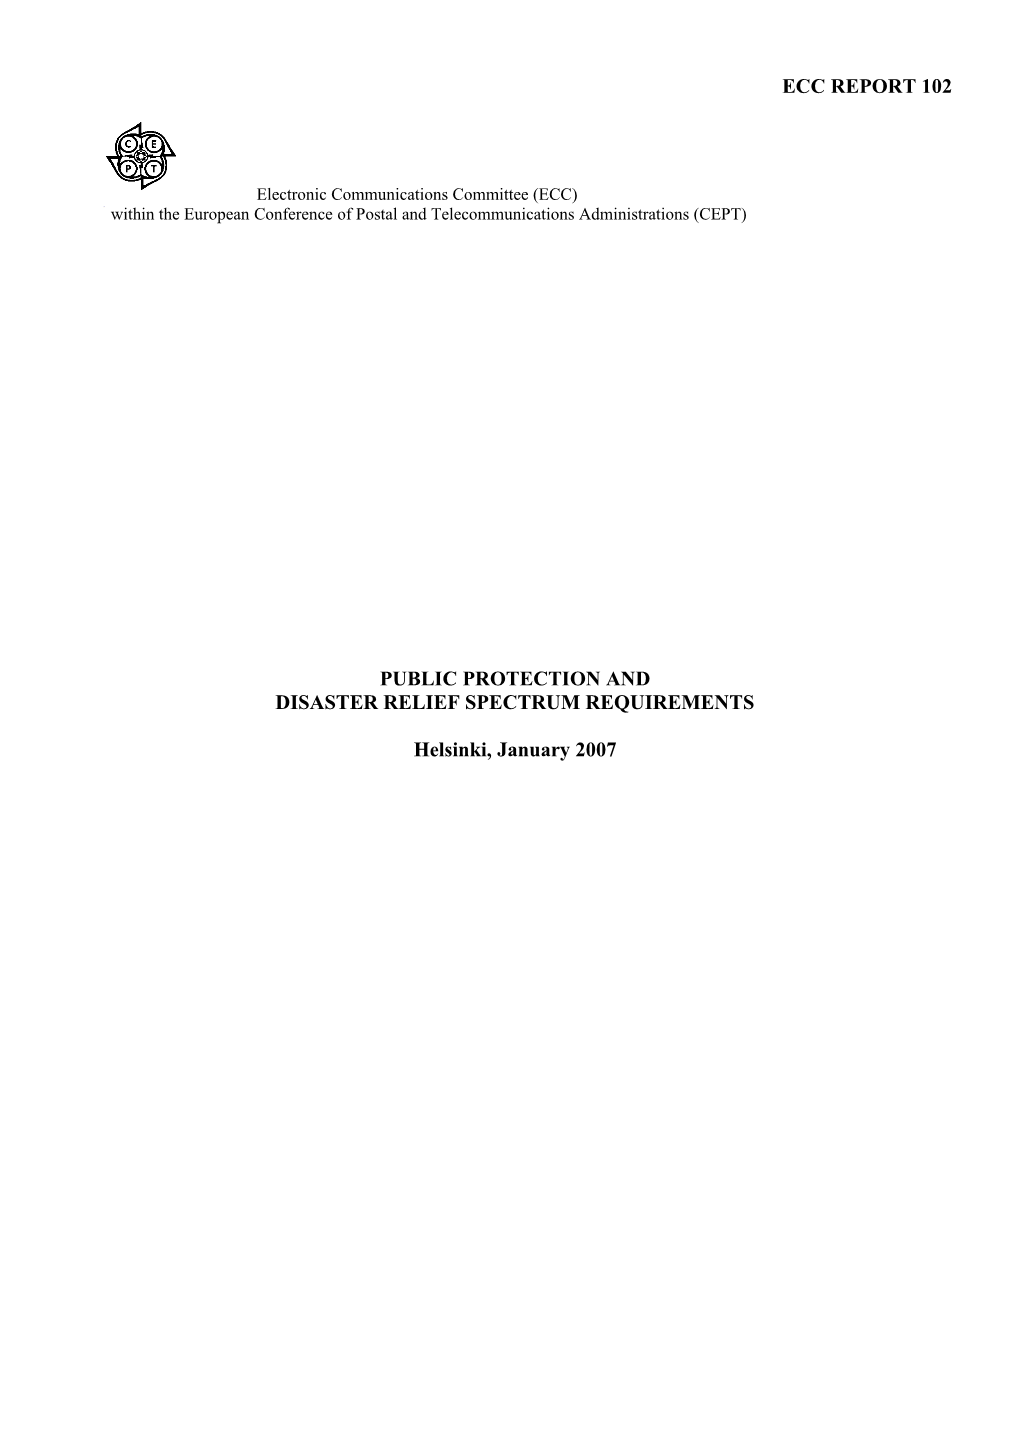 Draft ECC Report on PPDR